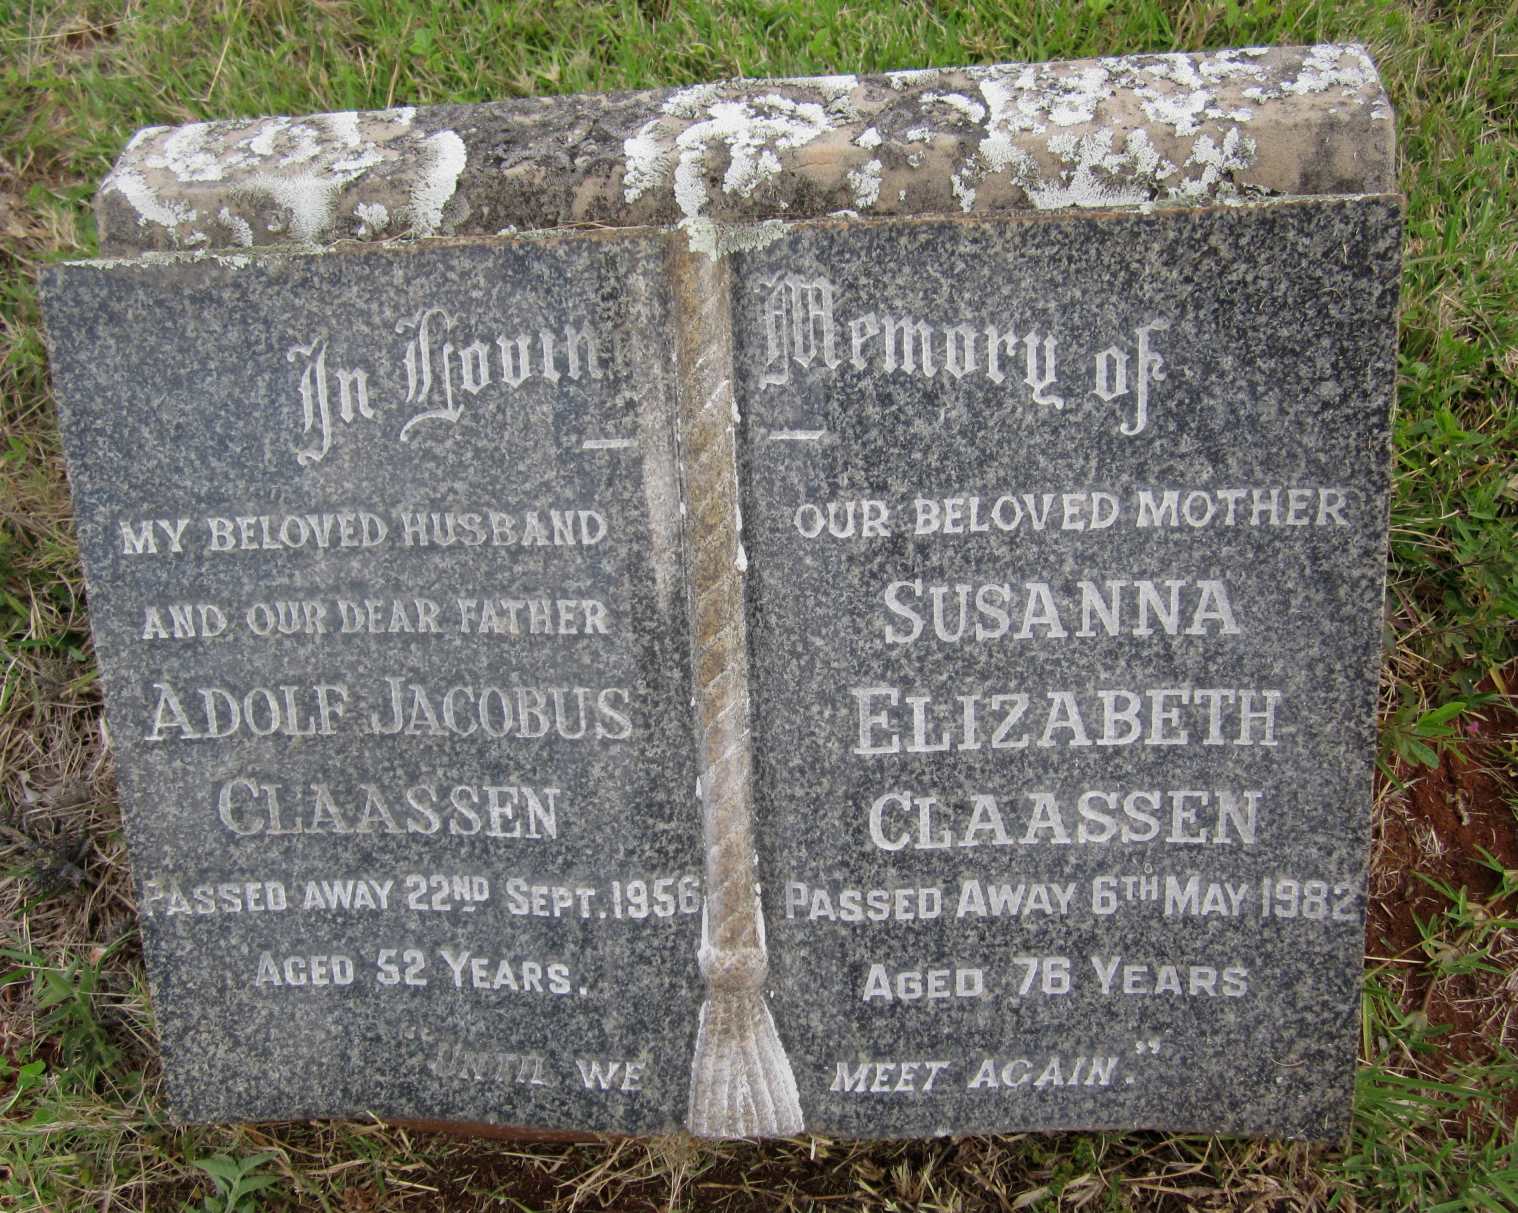 CLAASSEN Adolf Jacobus -1956 & Susanna Elizabeth -1982